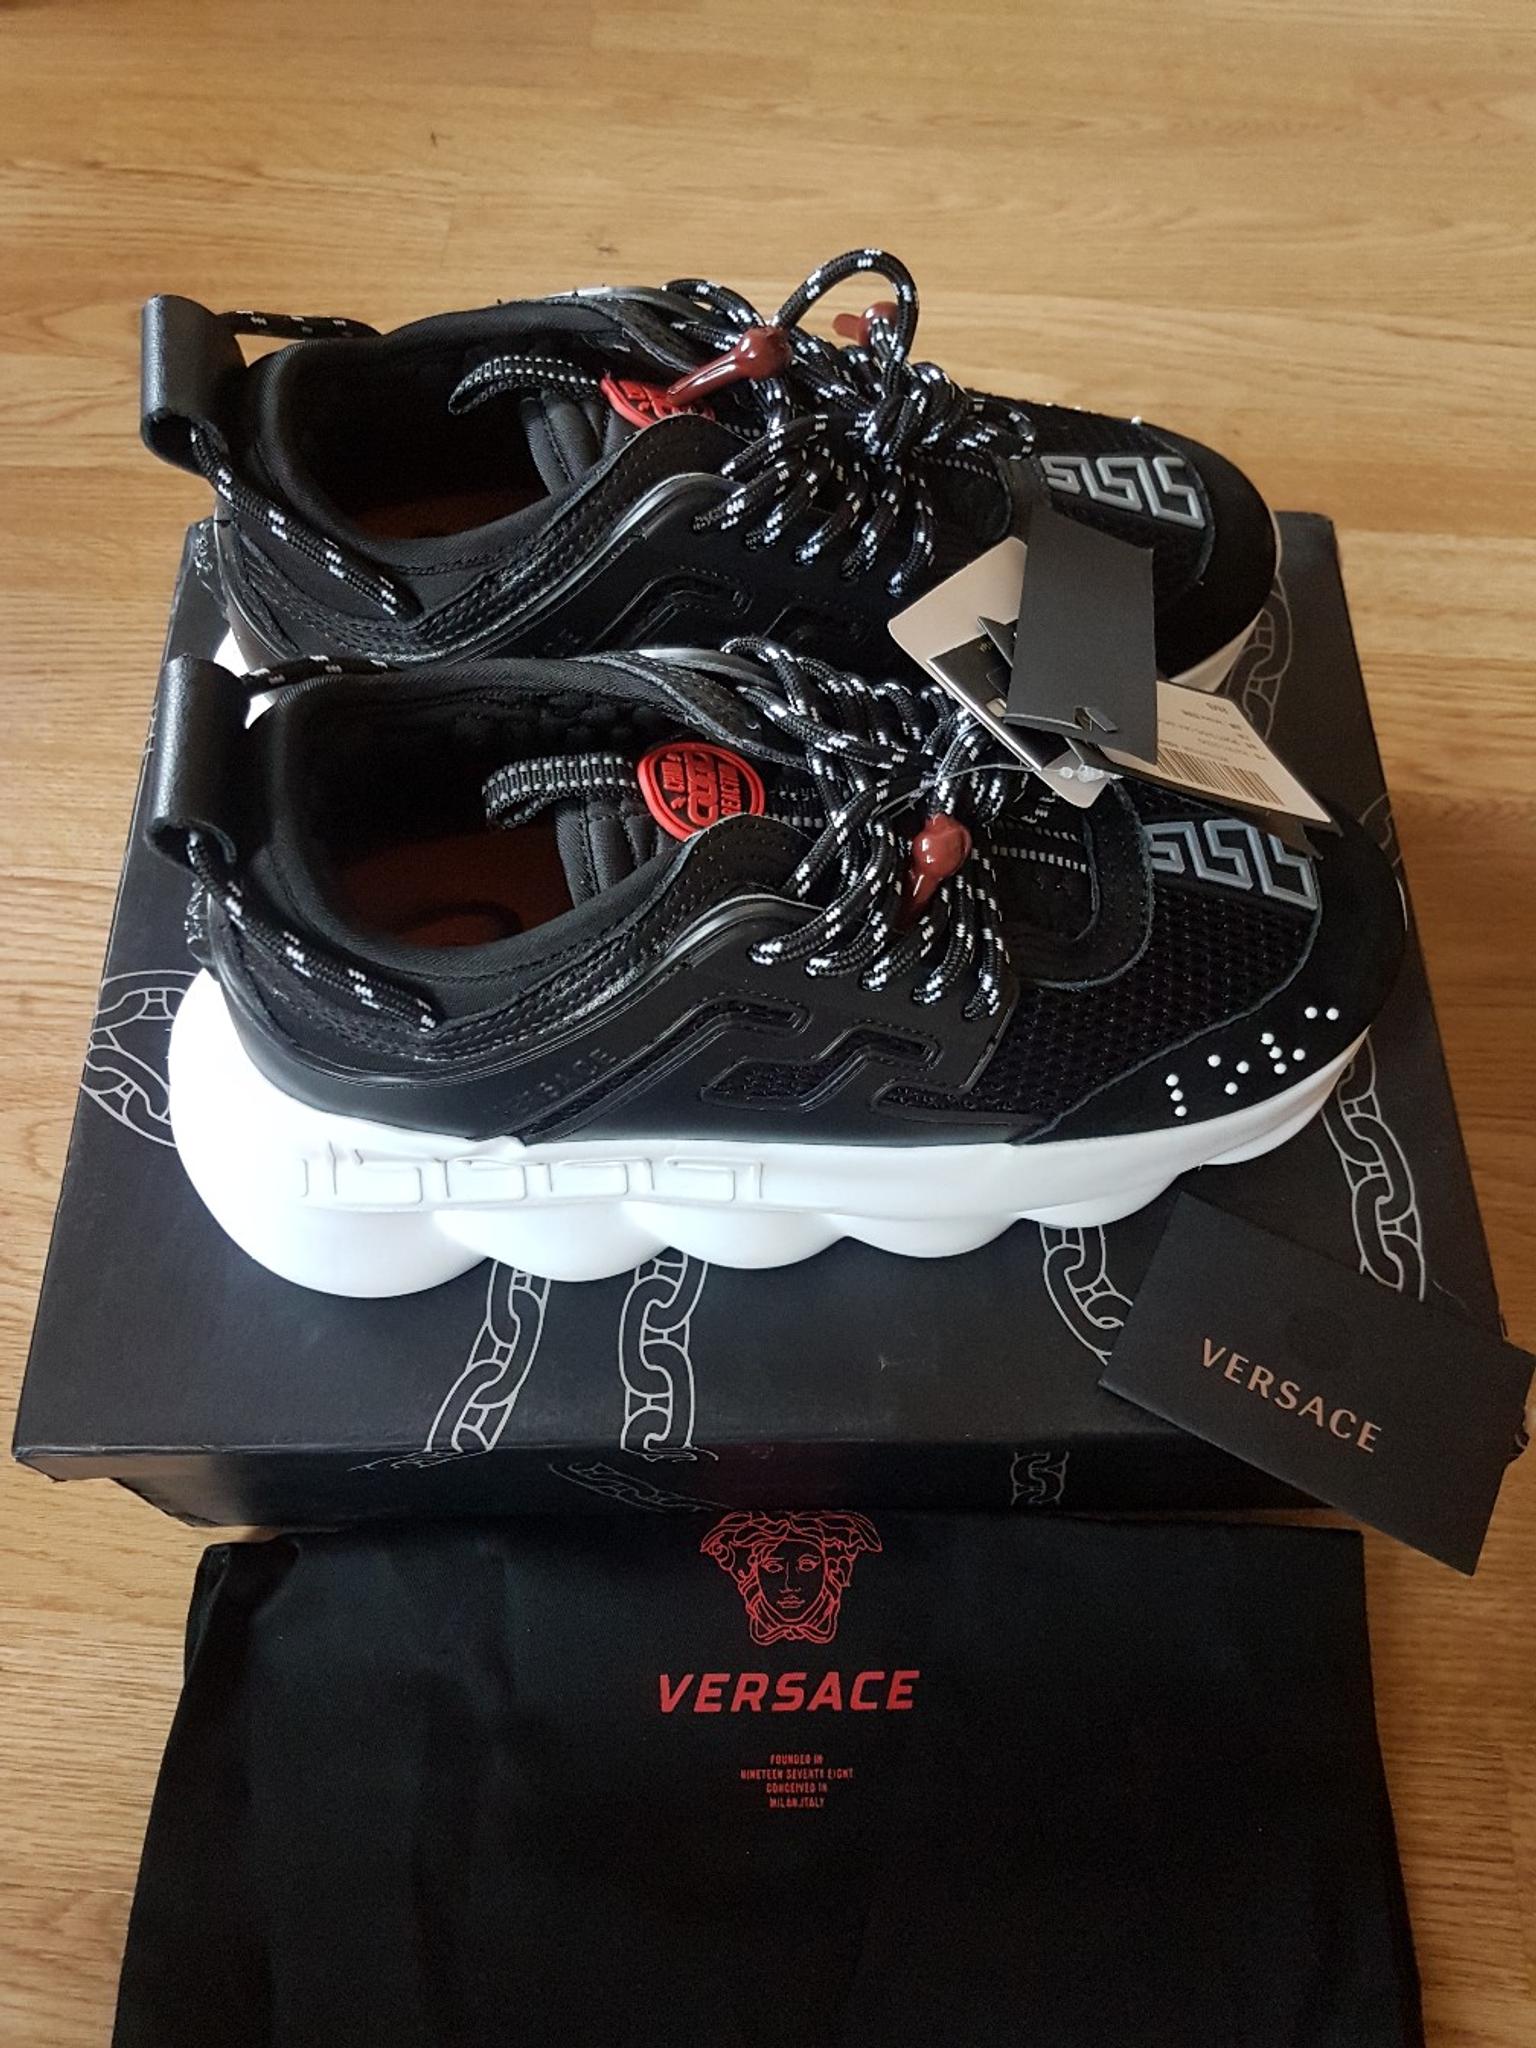 real versace shoes vs fake